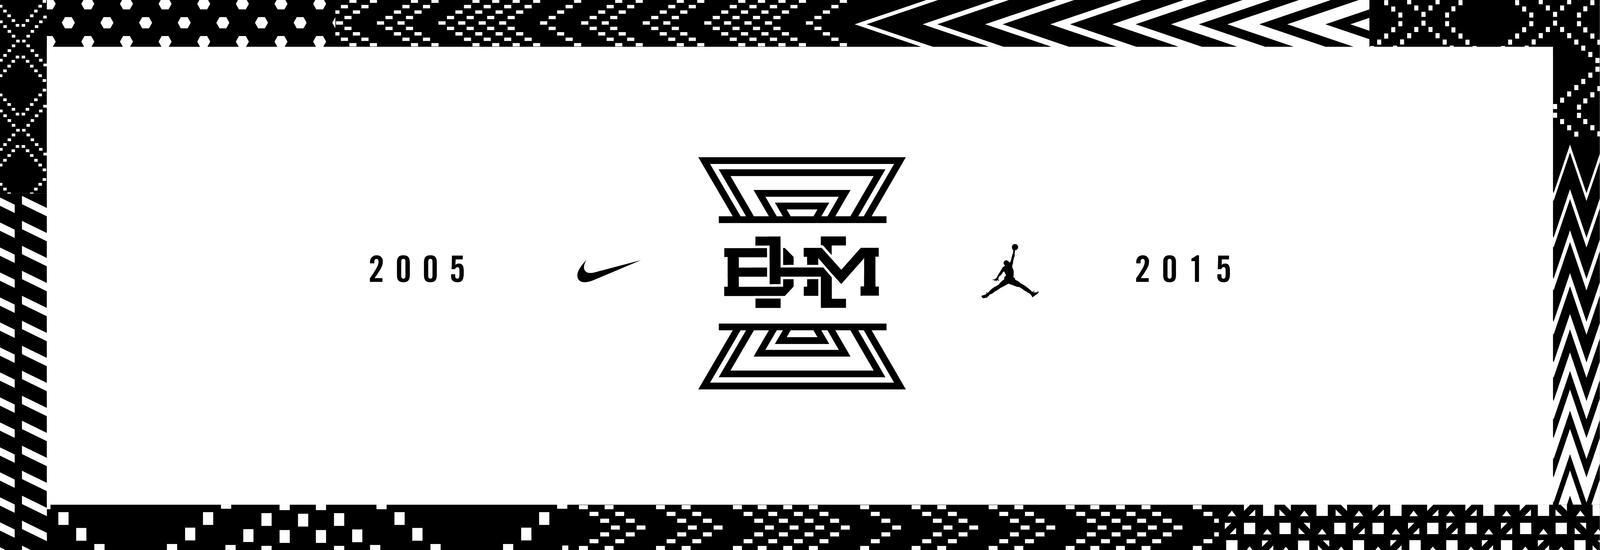 BHM Logo - NIKE, Inc.'s 10-Year Commitment to Black History Month - Nike News